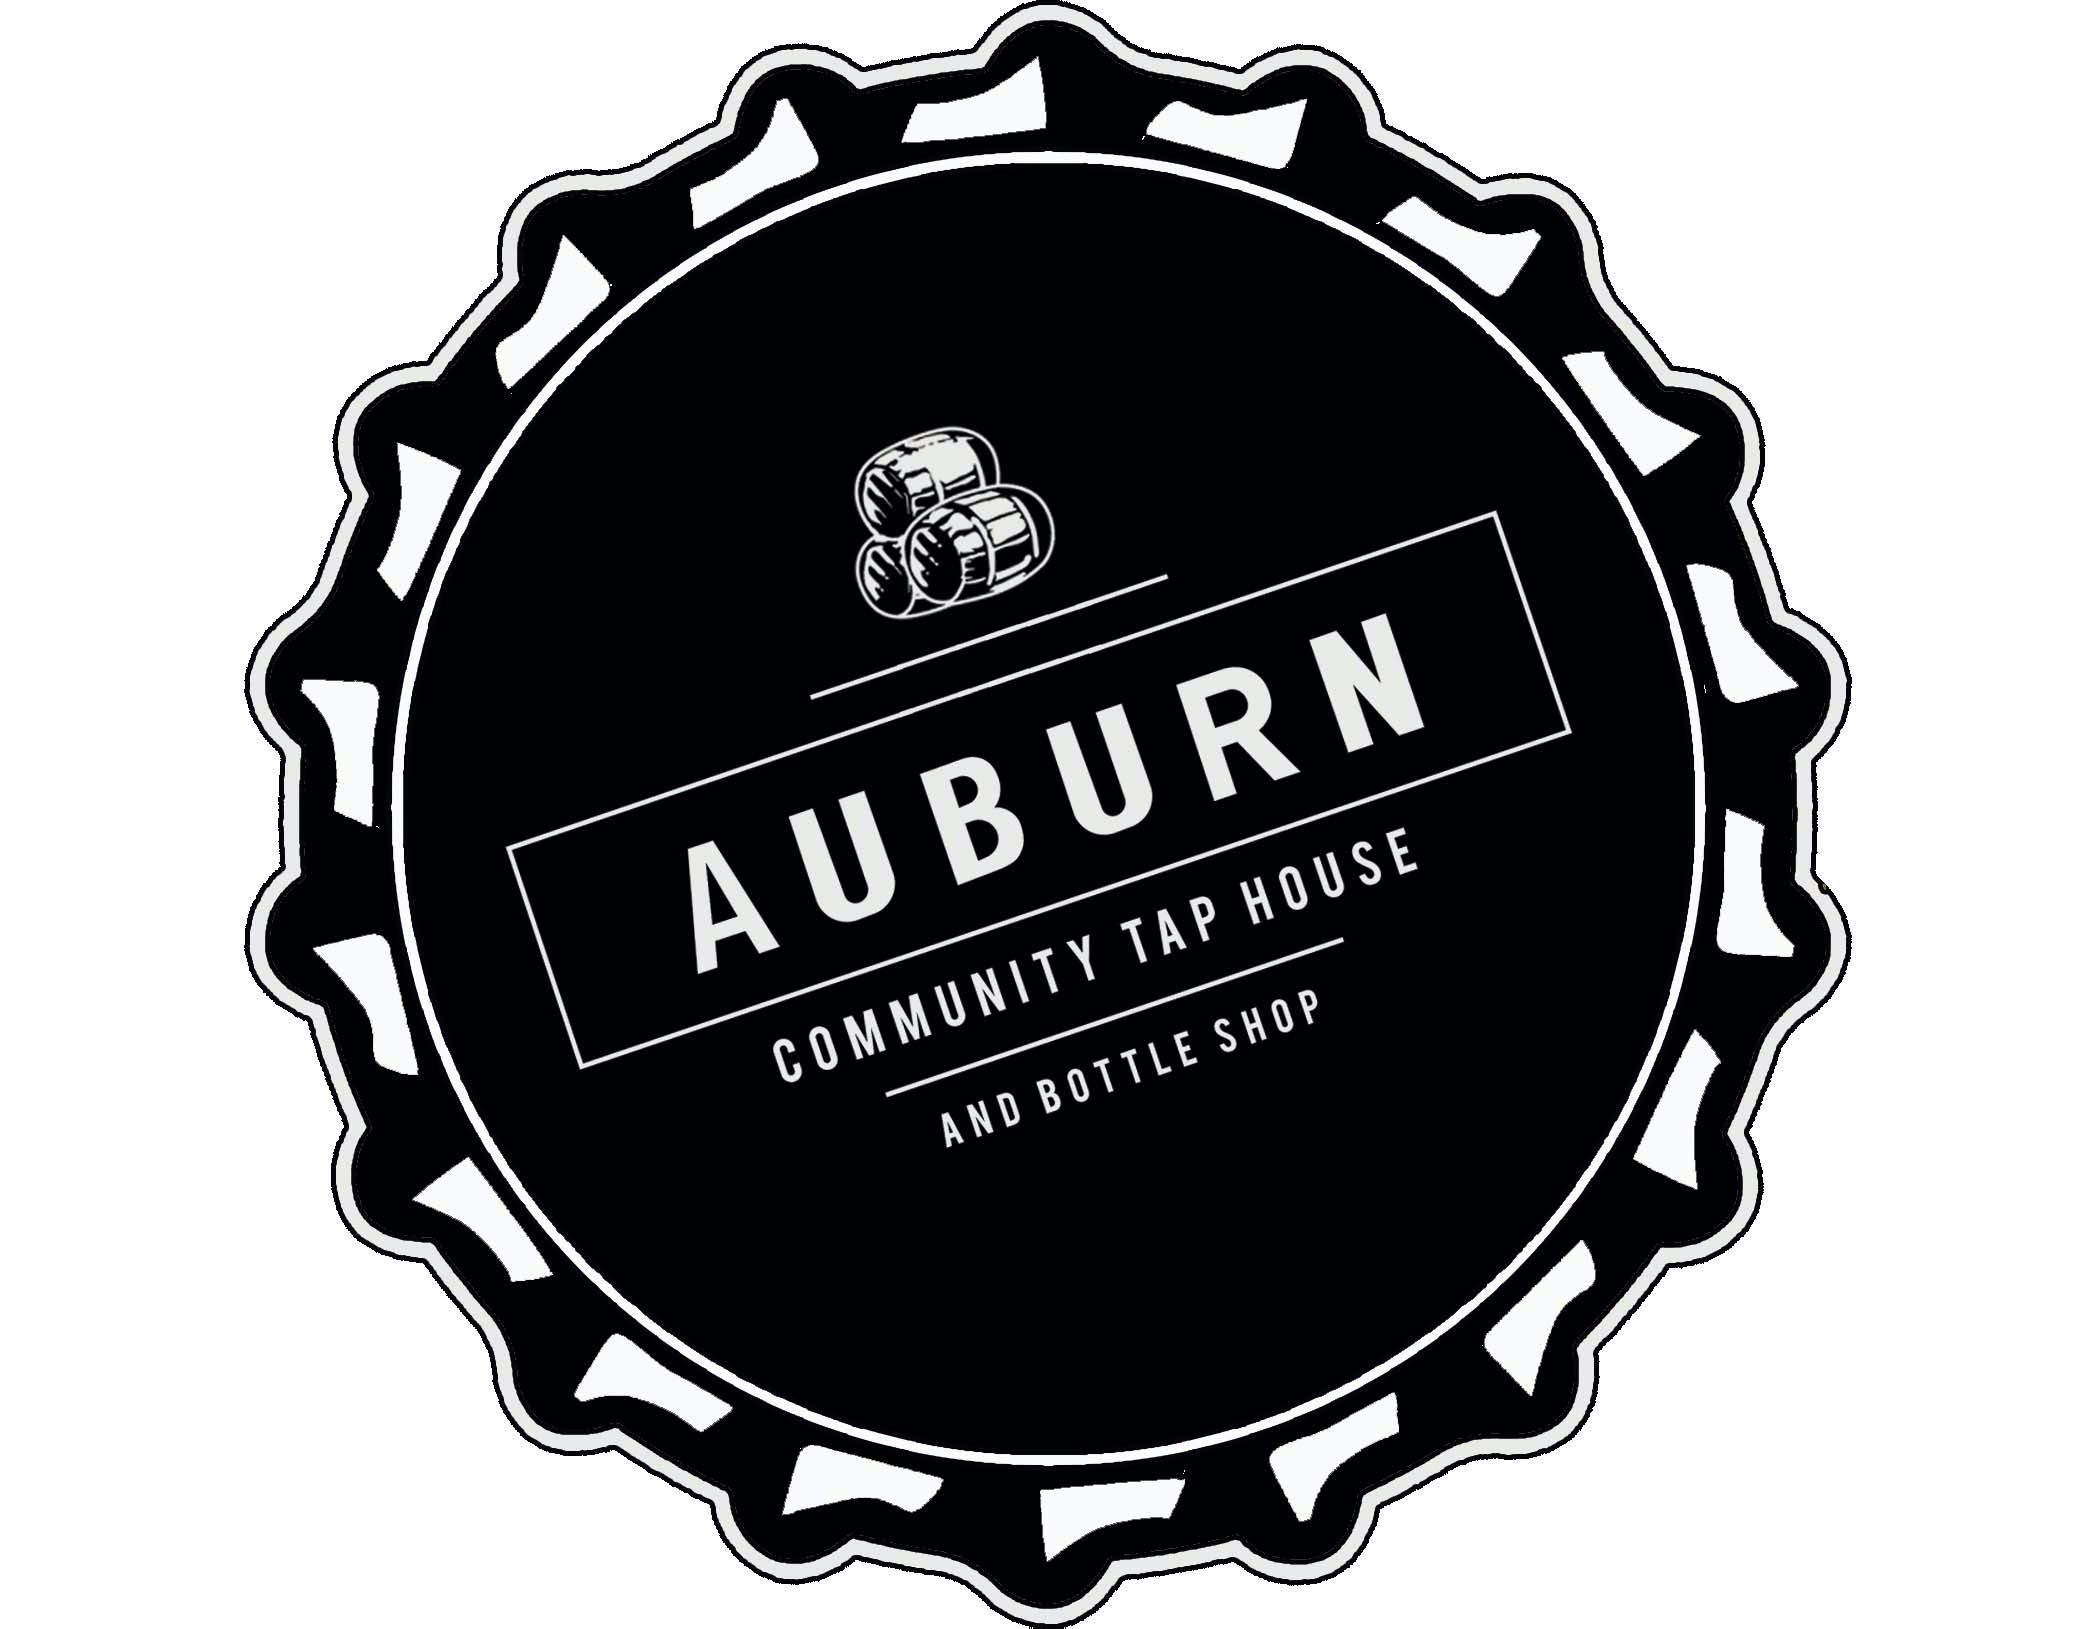 Auburn Community Tap House & Bottle Shop , Auburn, CA | Yaymaker